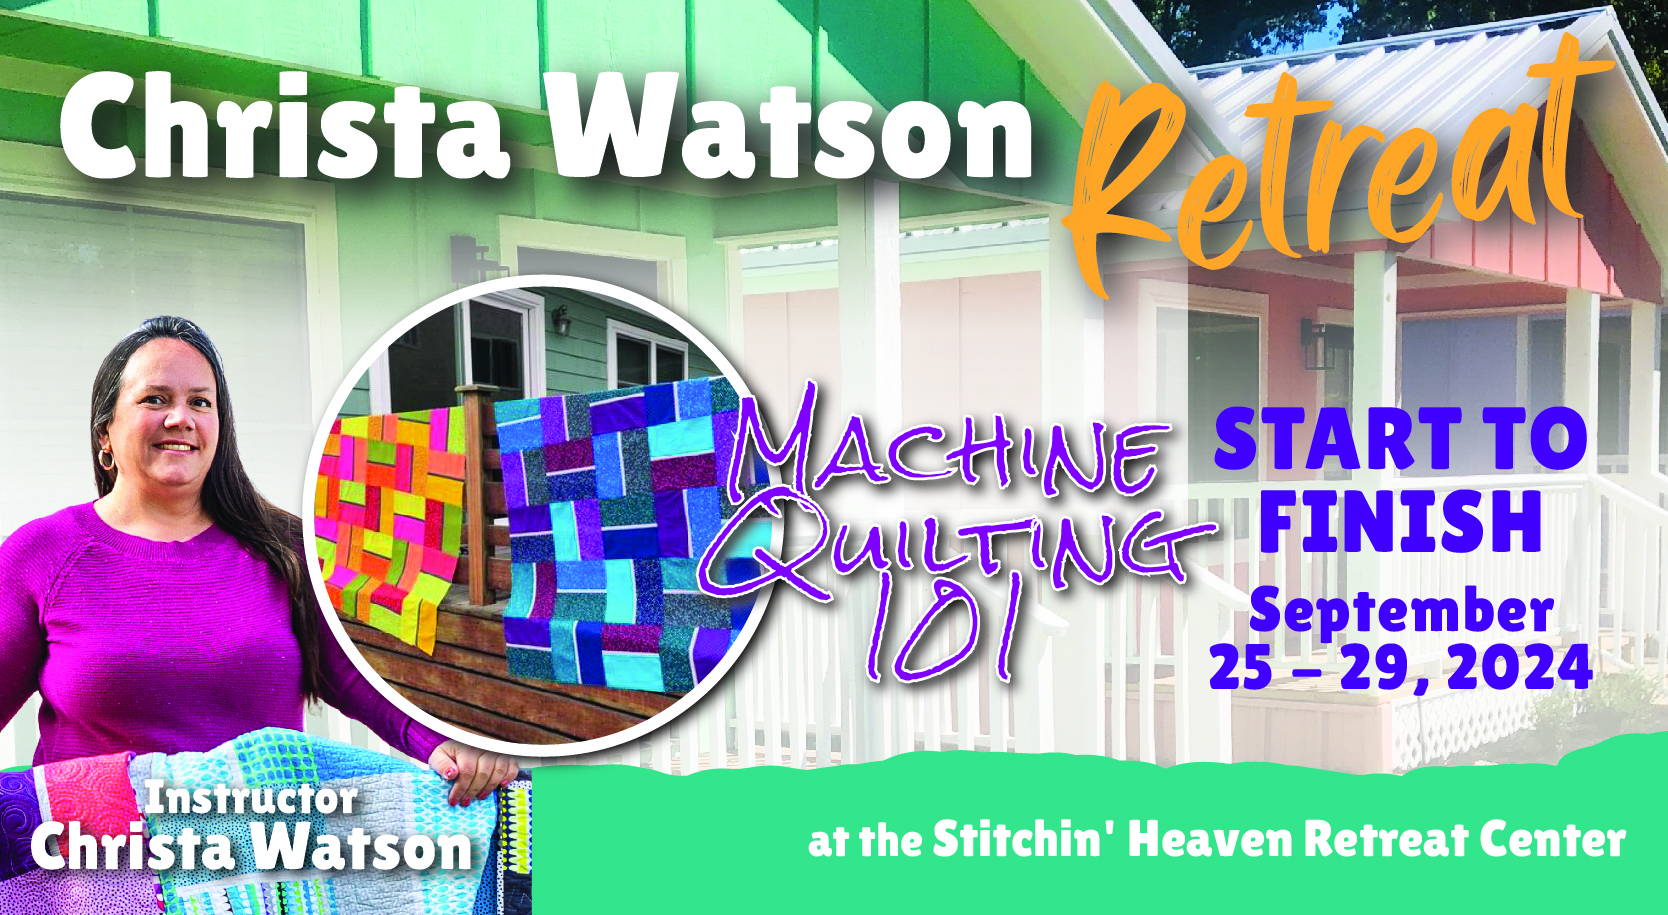 Christa Watson Retreat graphic - September 25-29, 2024